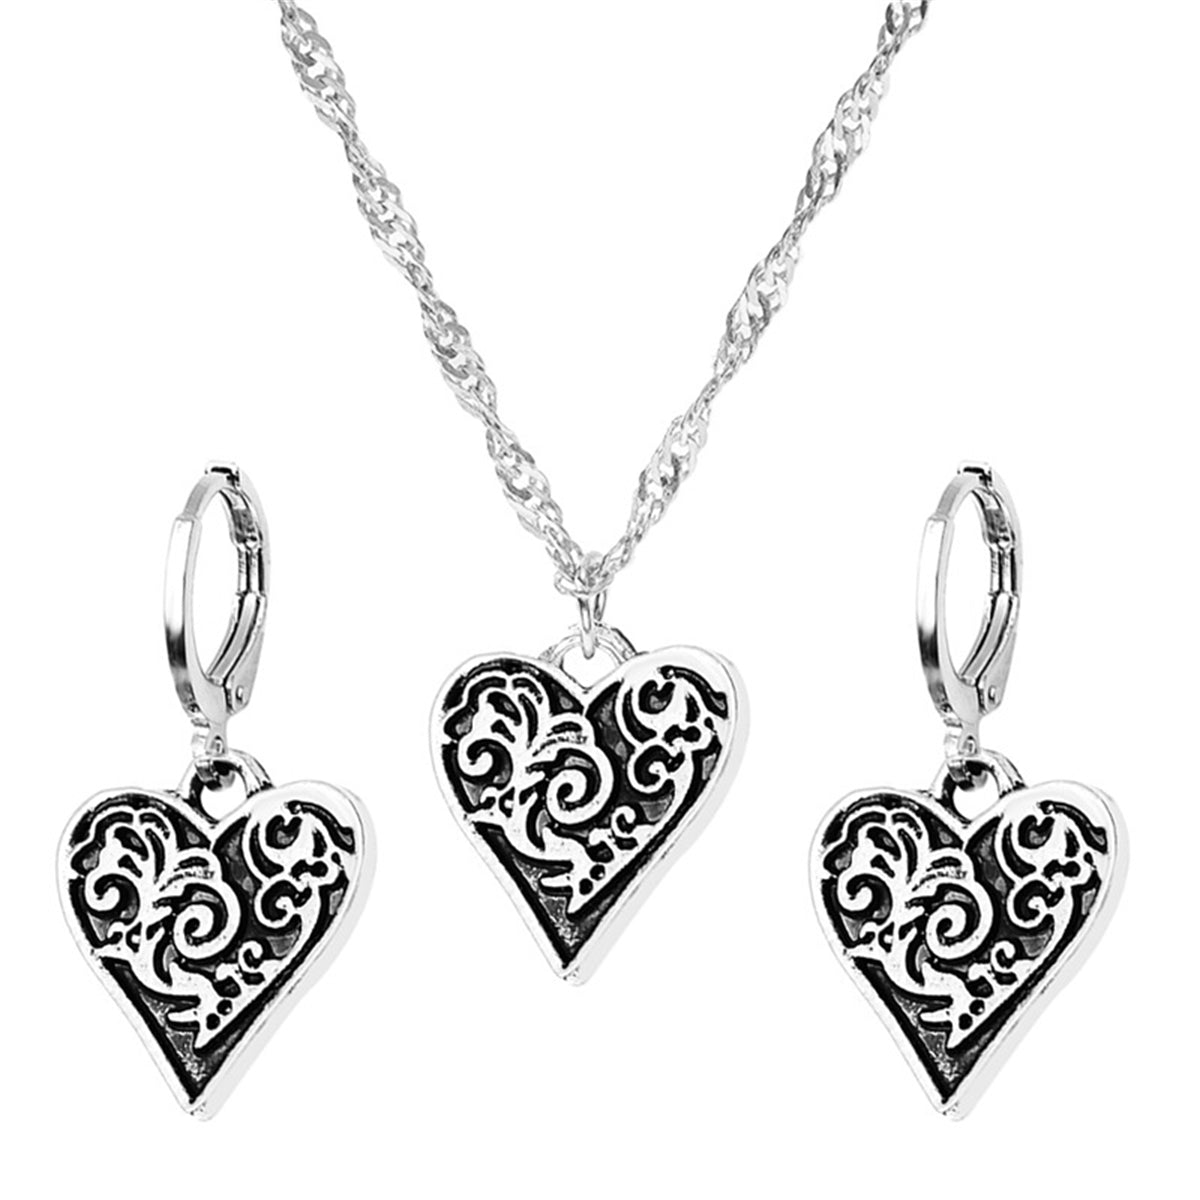 Silver-Plated Filigree Heart Huggie Earrings & Pendant Necklace